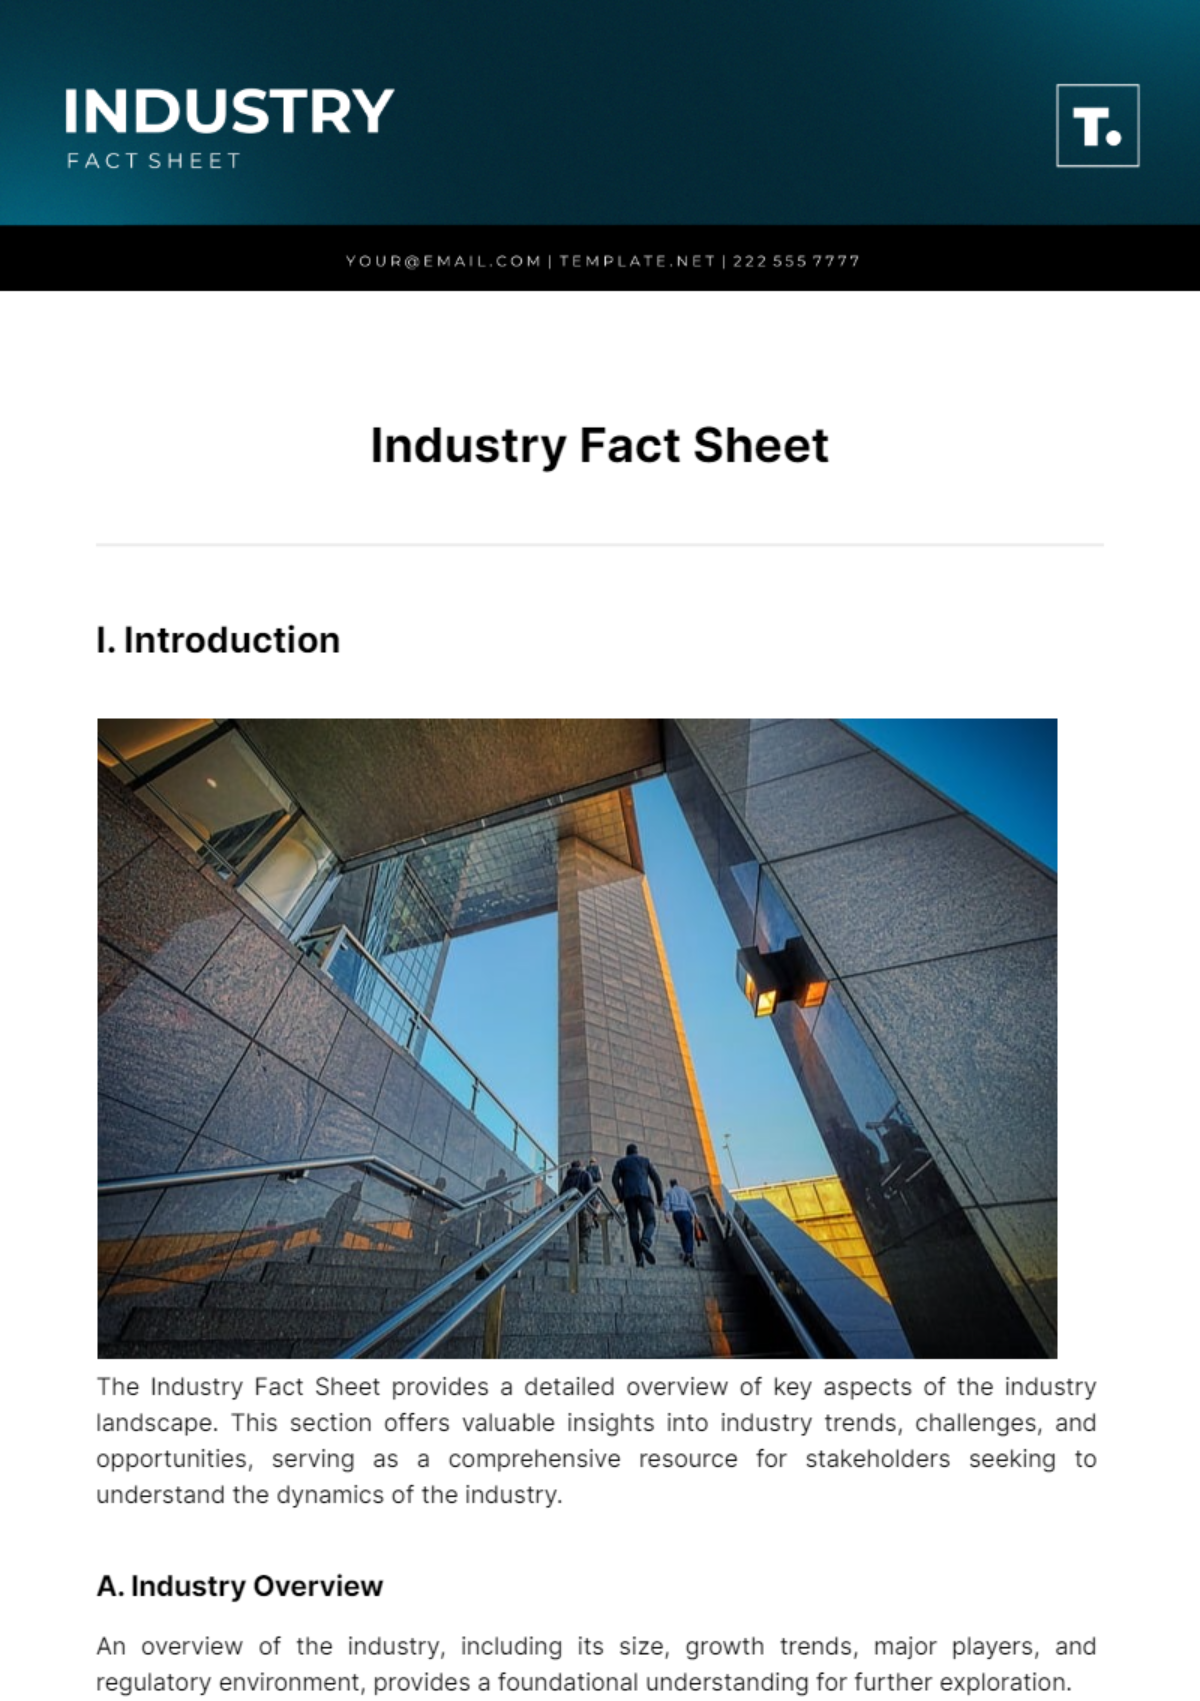 Industry Fact Sheet Template